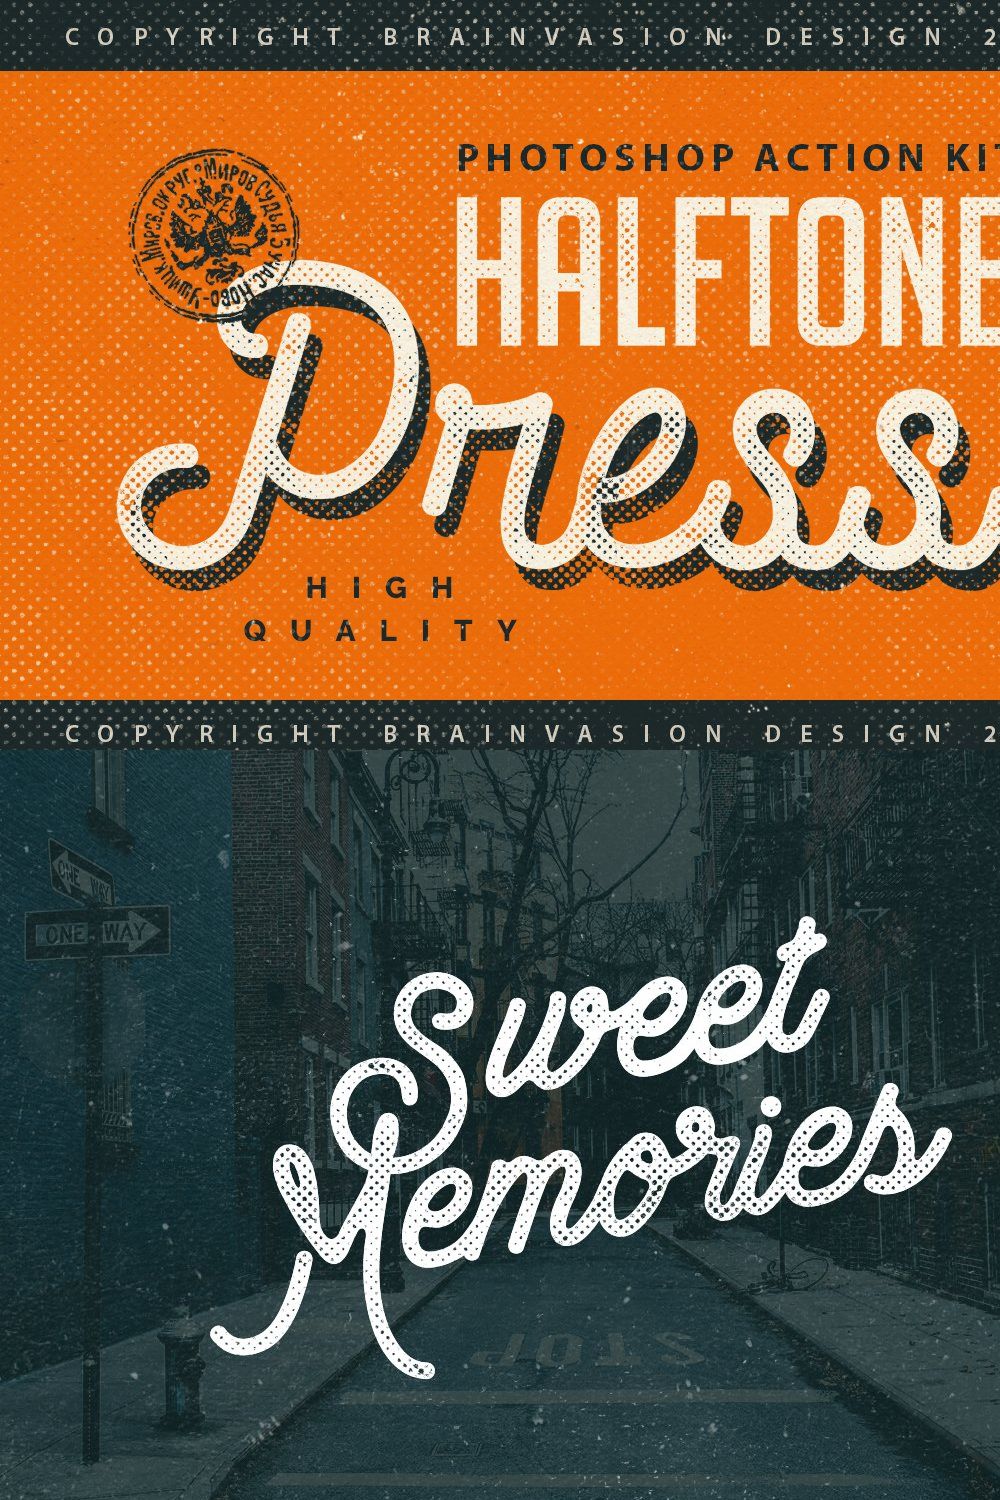 Halftone Press - Photoshop Kit pinterest preview image.